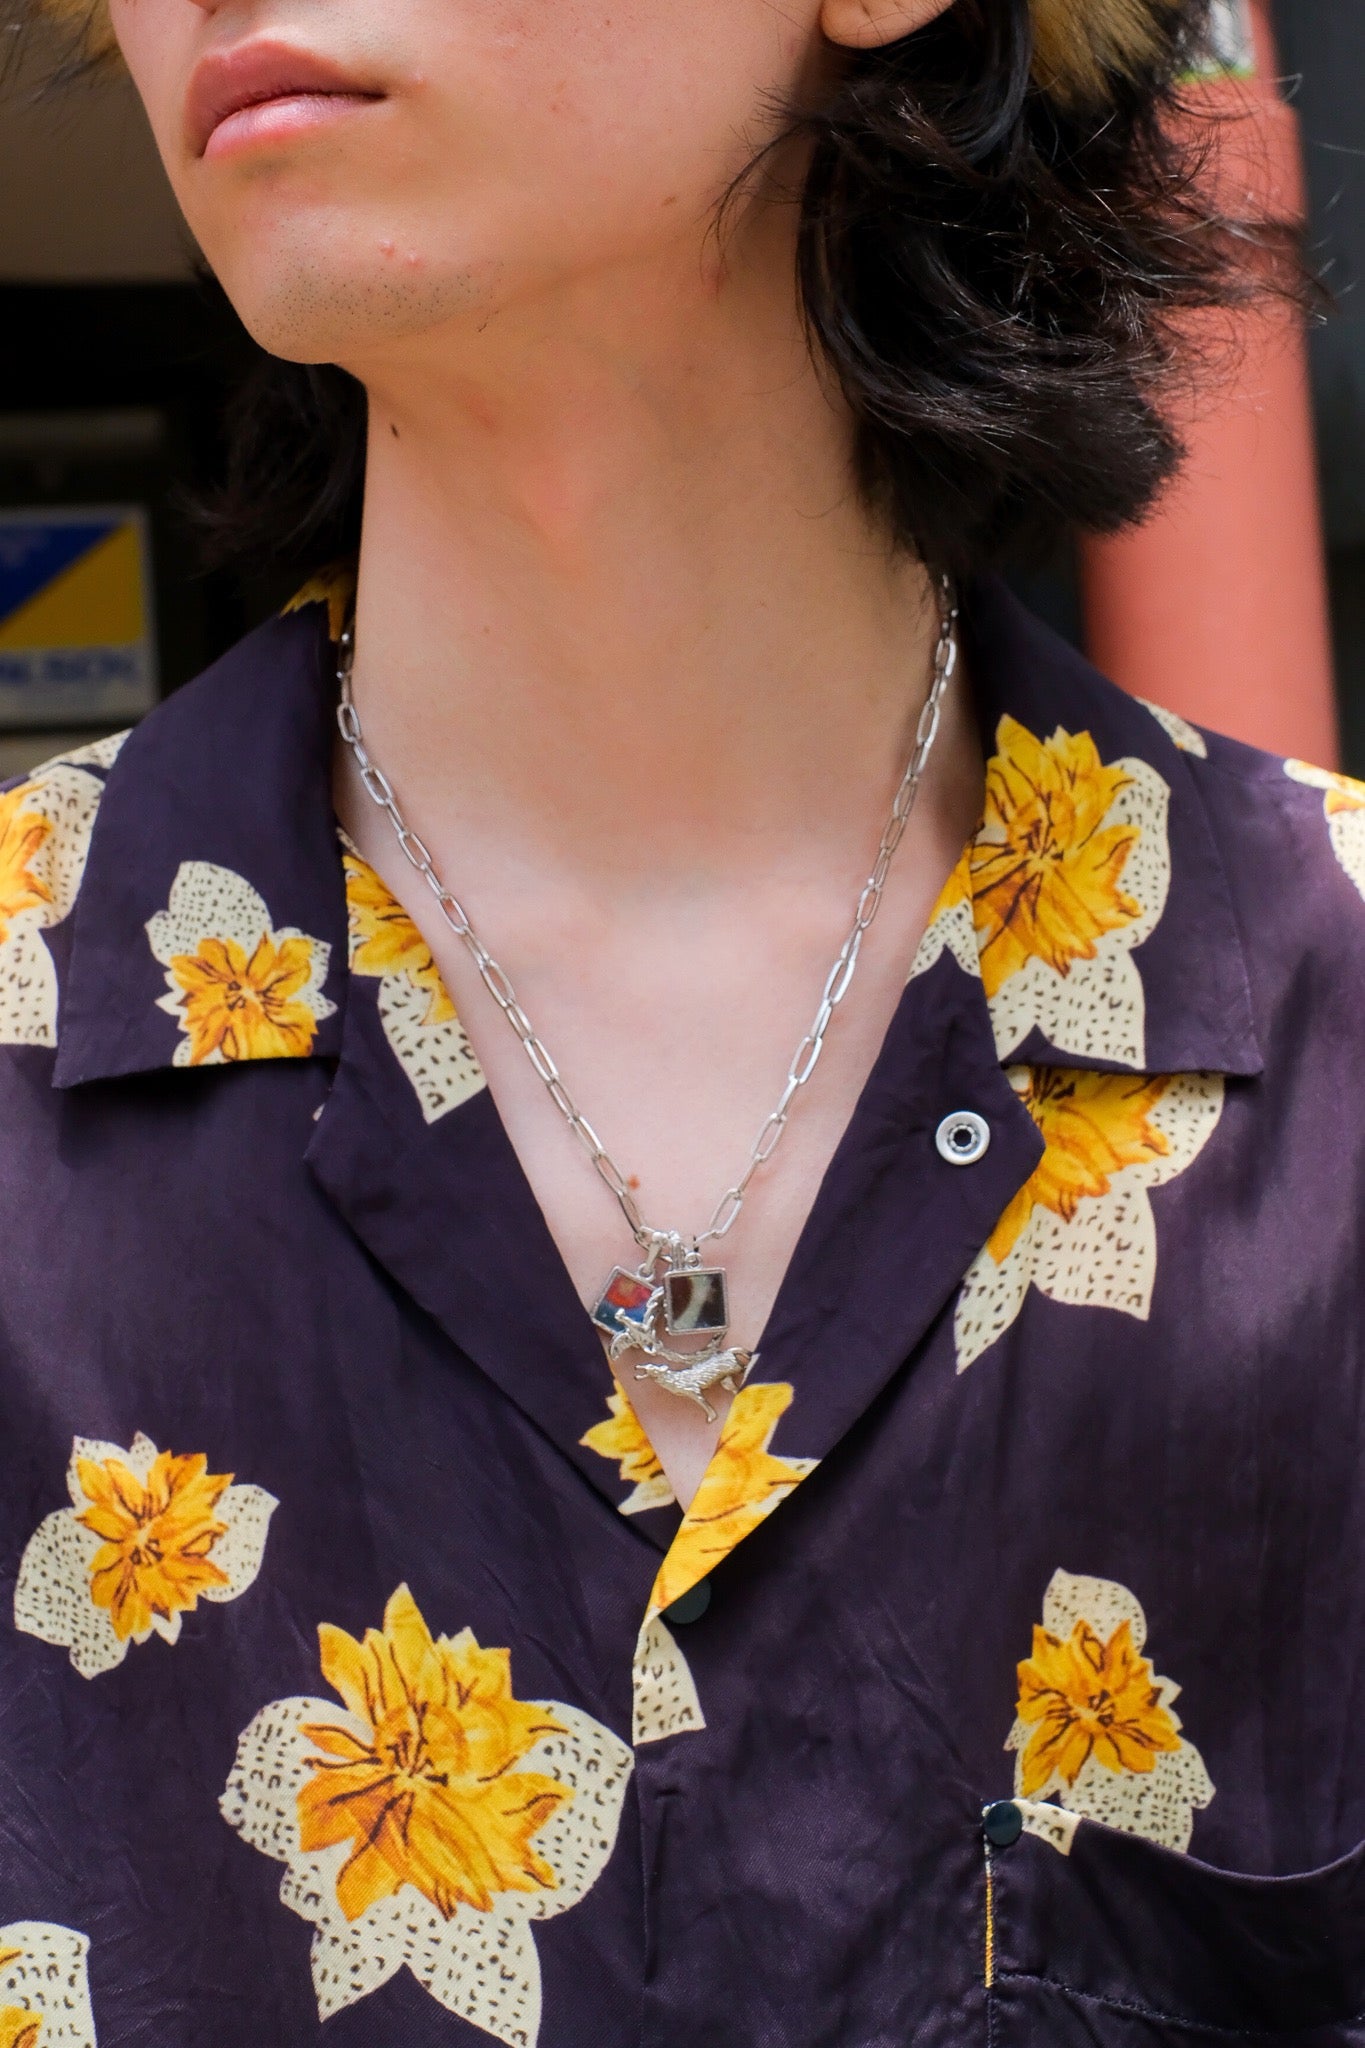 TOGA VIRILIS(トーガ ビリリース)のMotif necklaceの通販｜PALETTE art ...